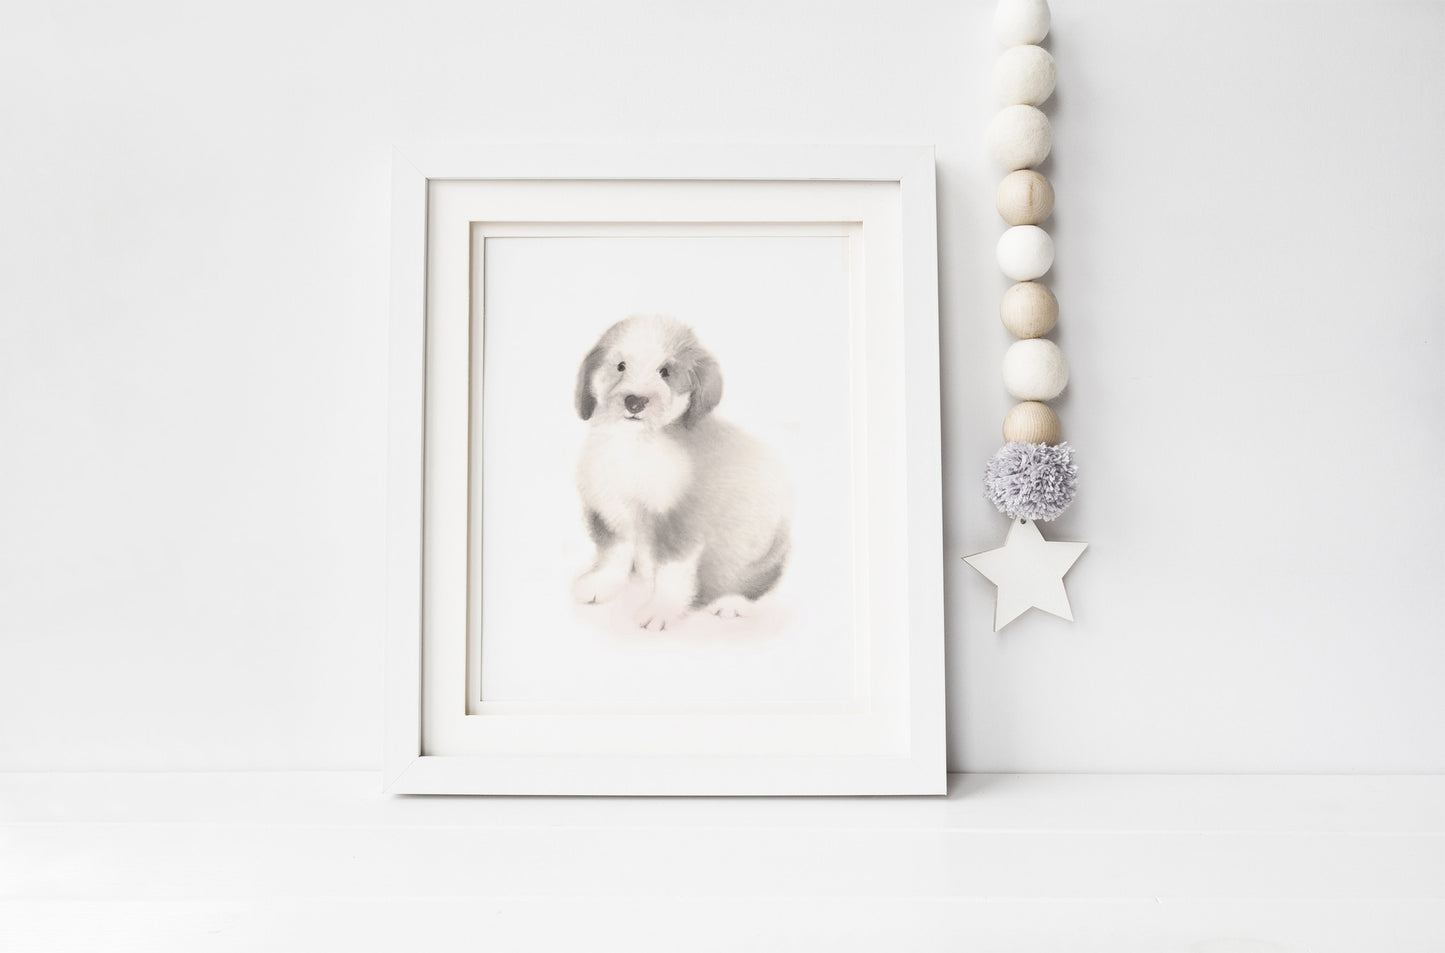 Puppy 2 Nursery Art Print - Sweet Blush - Studio Q - Art by Nicky Quartermaine Scott